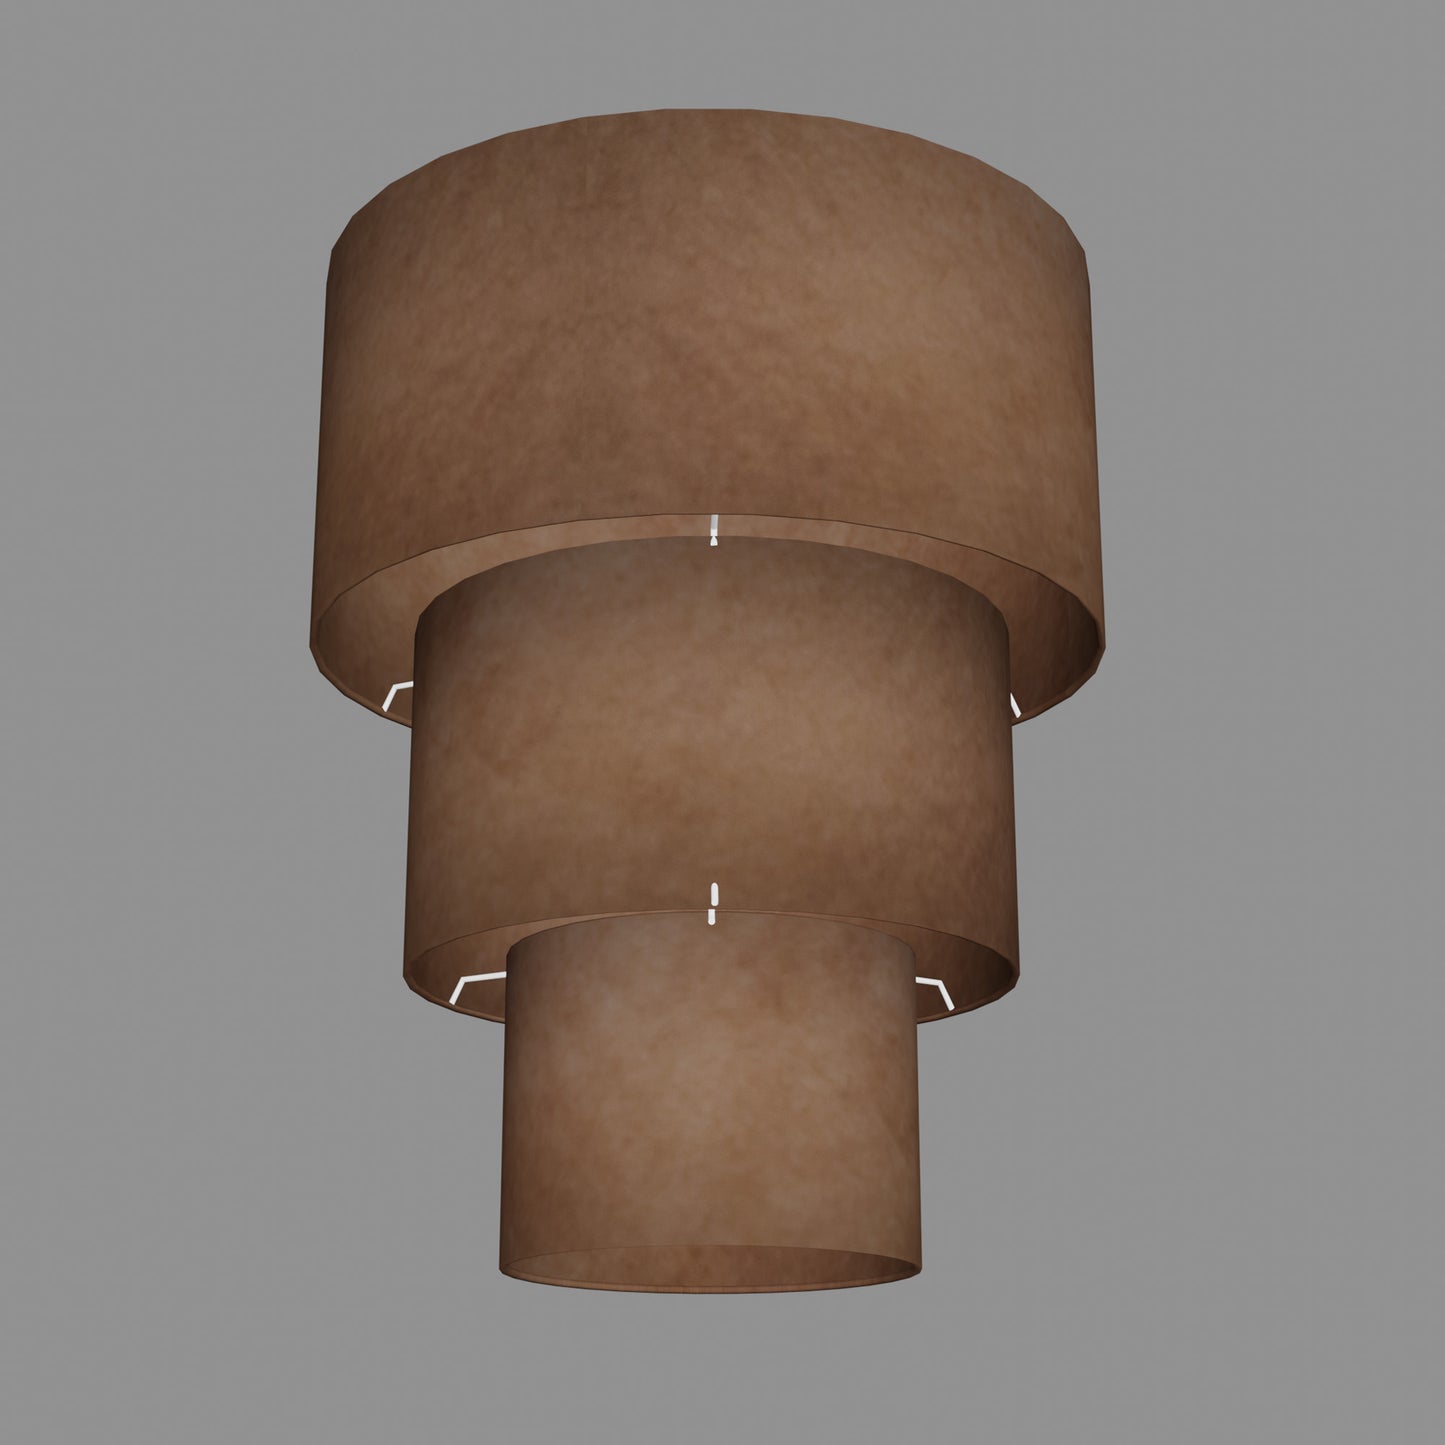 3 Tier Lamp Shade - P58 - Brown Lokta, 40cm x 20cm, 30cm x 17.5cm & 20cm x 15cm